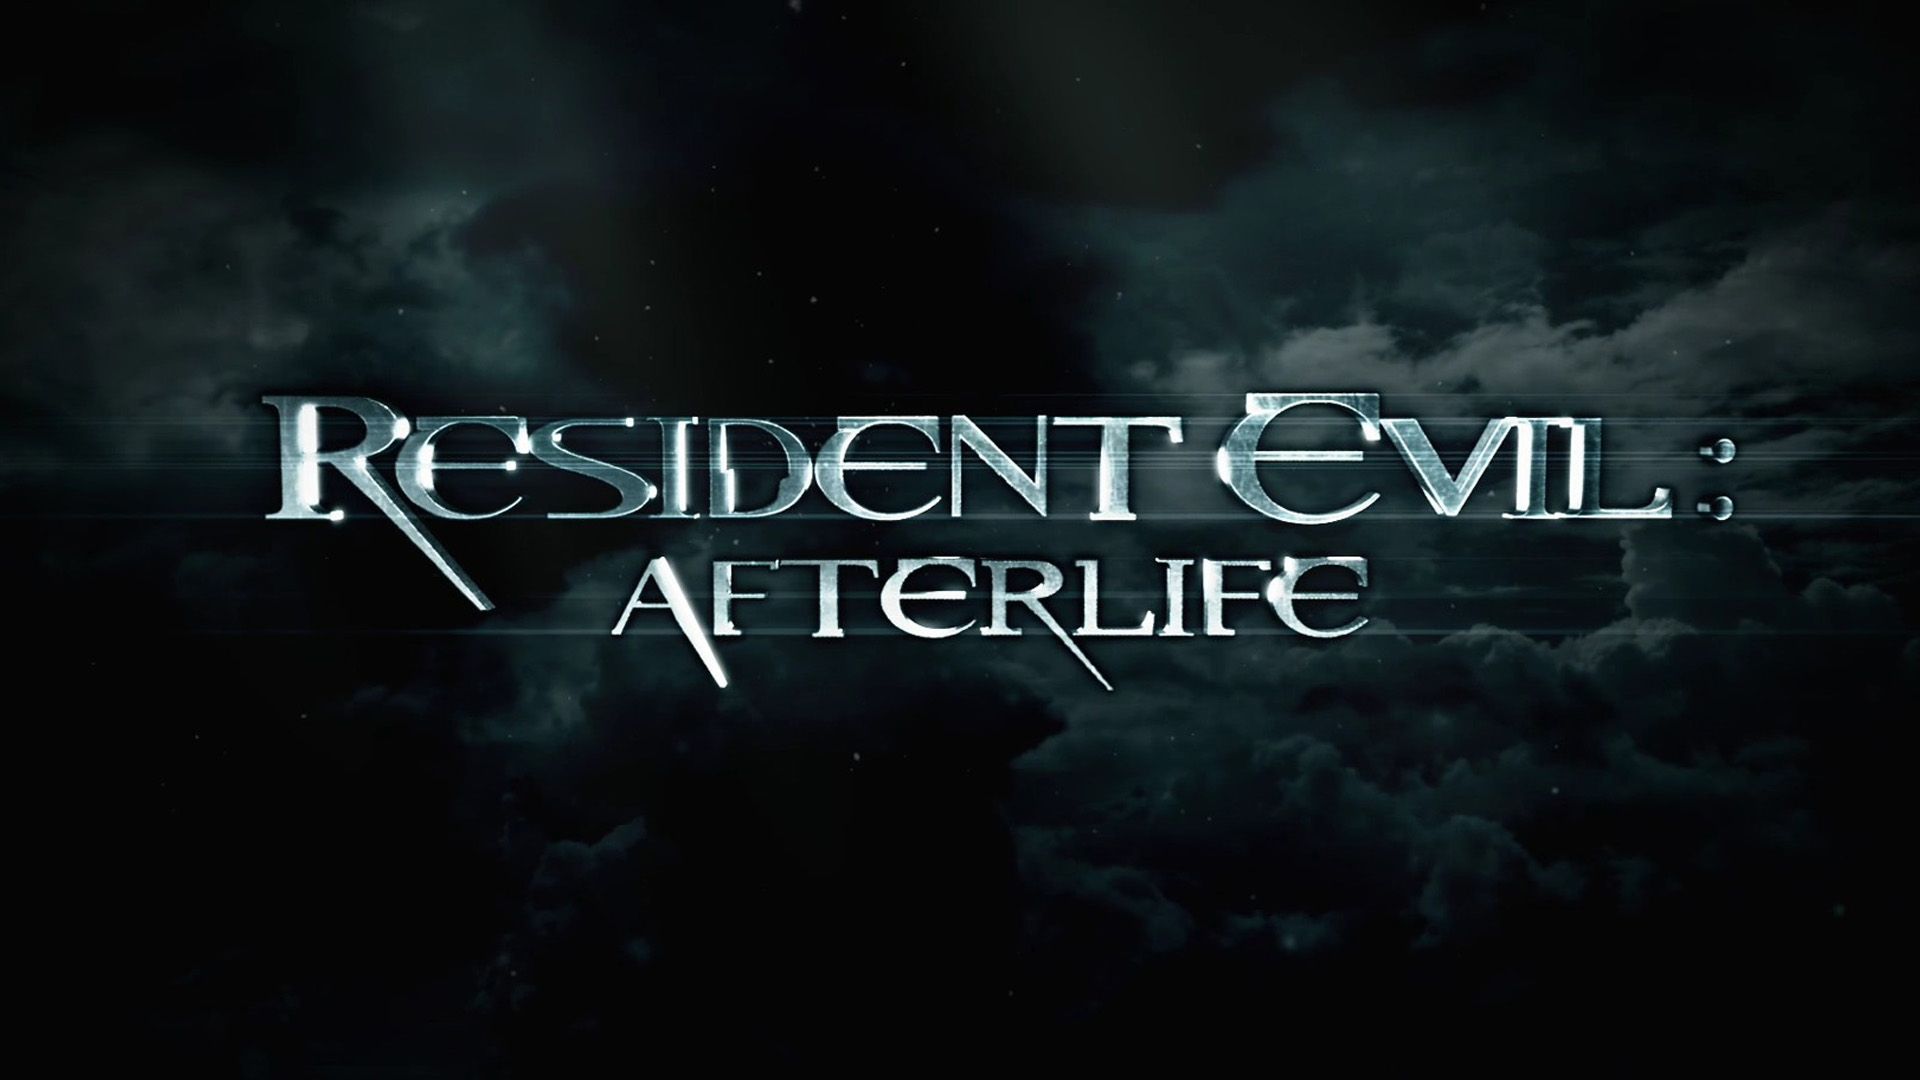 Full HD 1080p Resident evil Wallpapers HD, Desktop Backgrounds ...